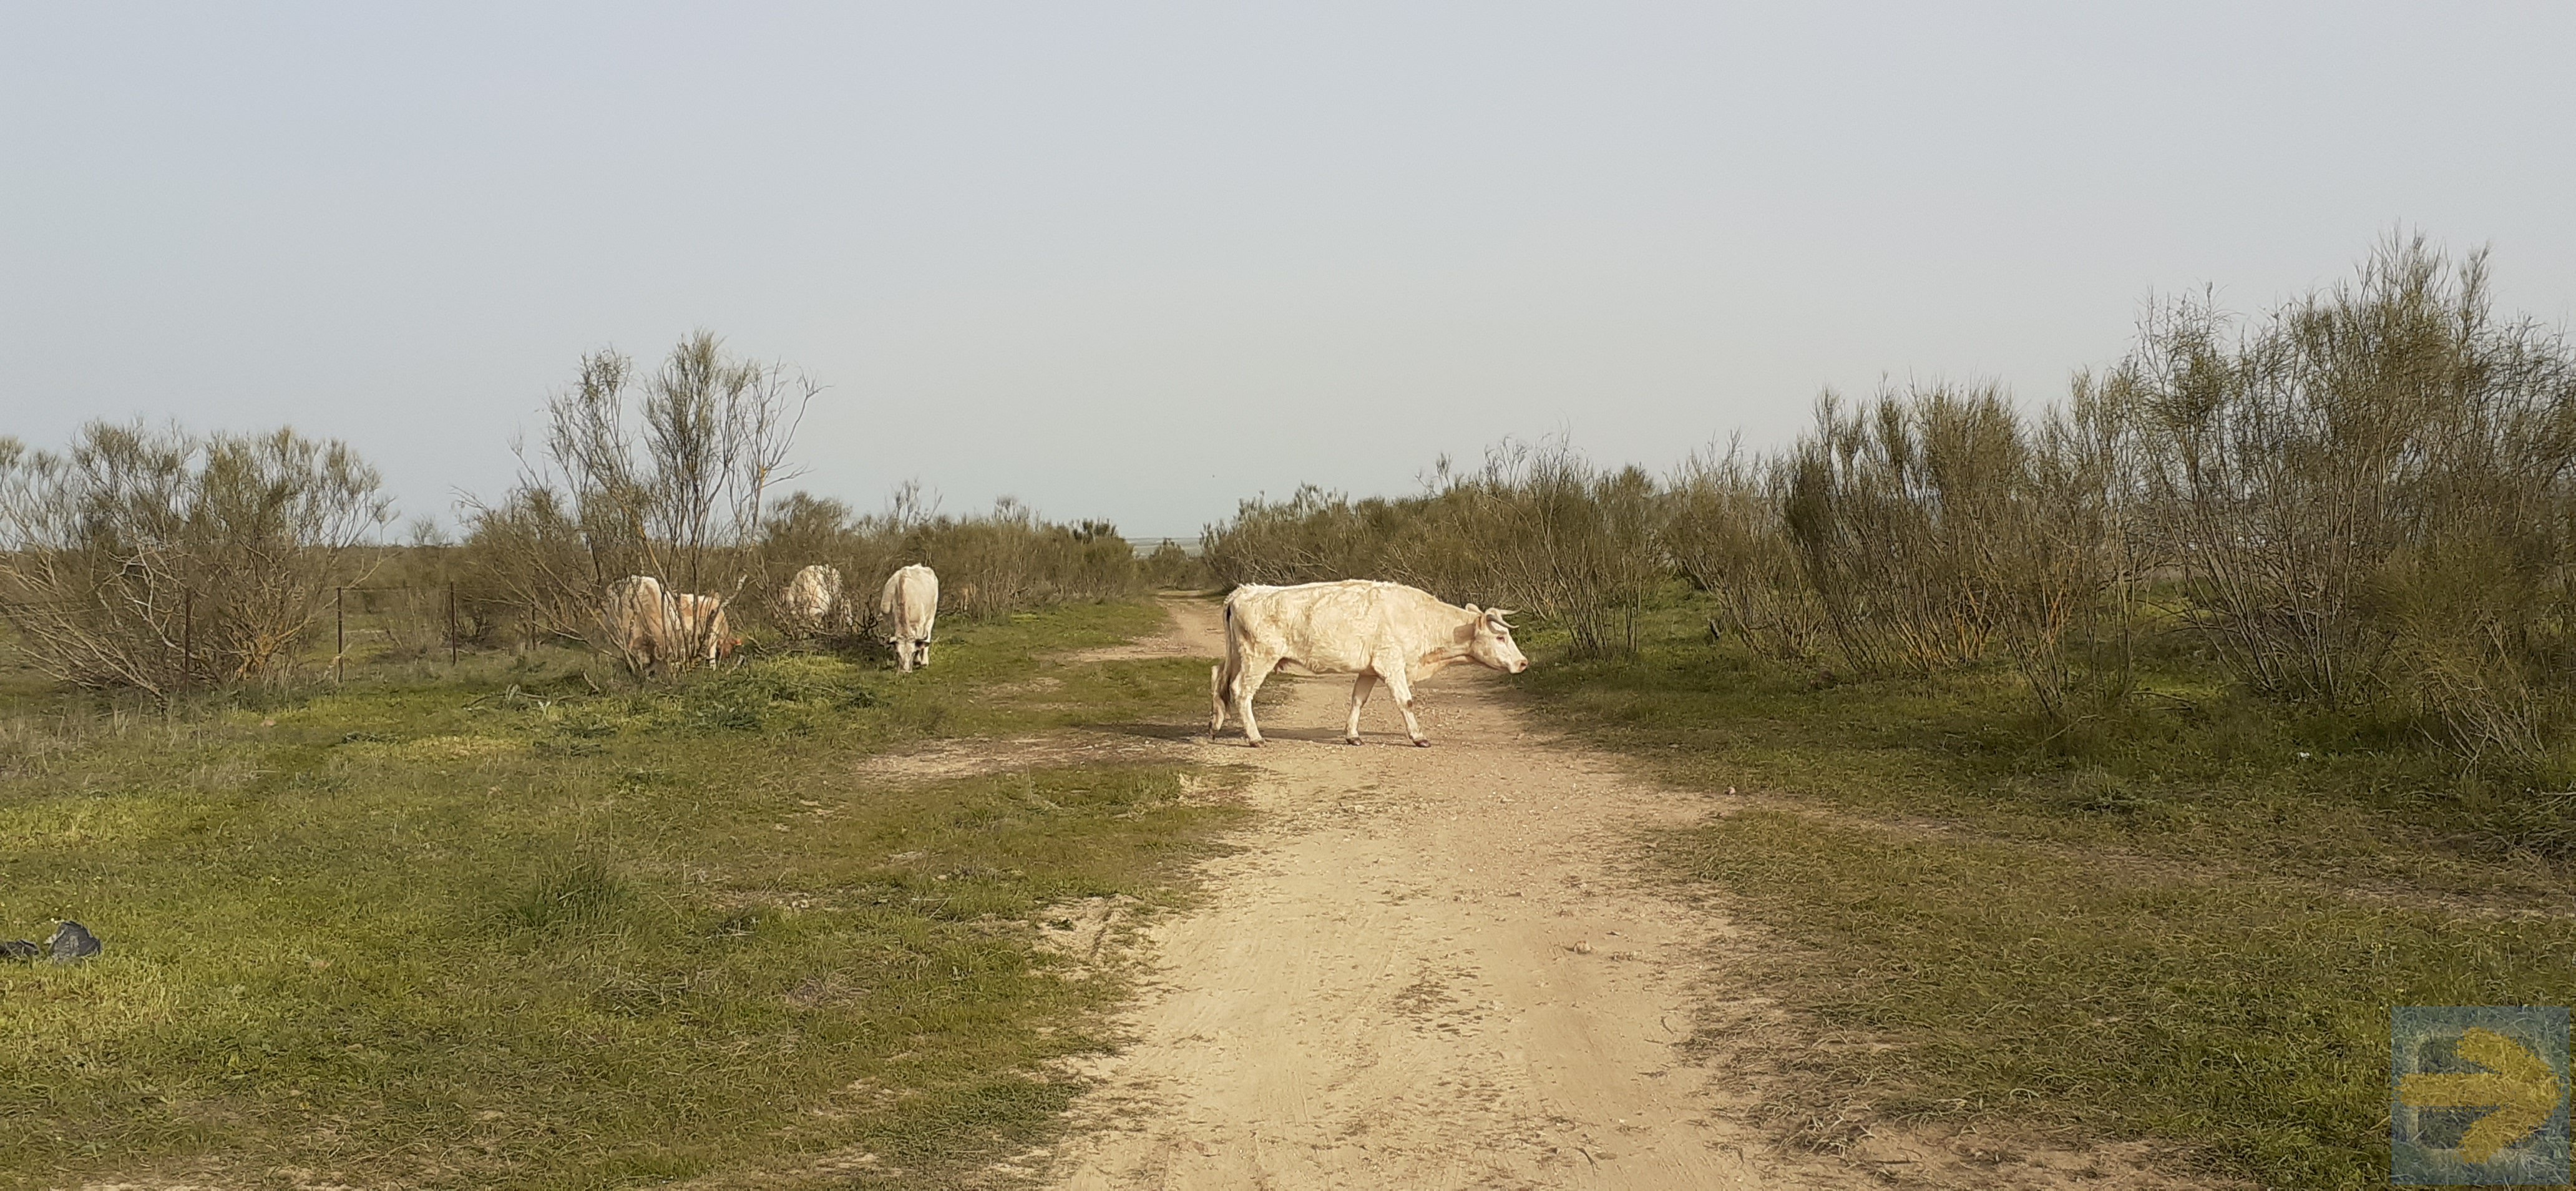 Free Range Cows crossing your way. Near Valdesalor. 28 Feb 2020